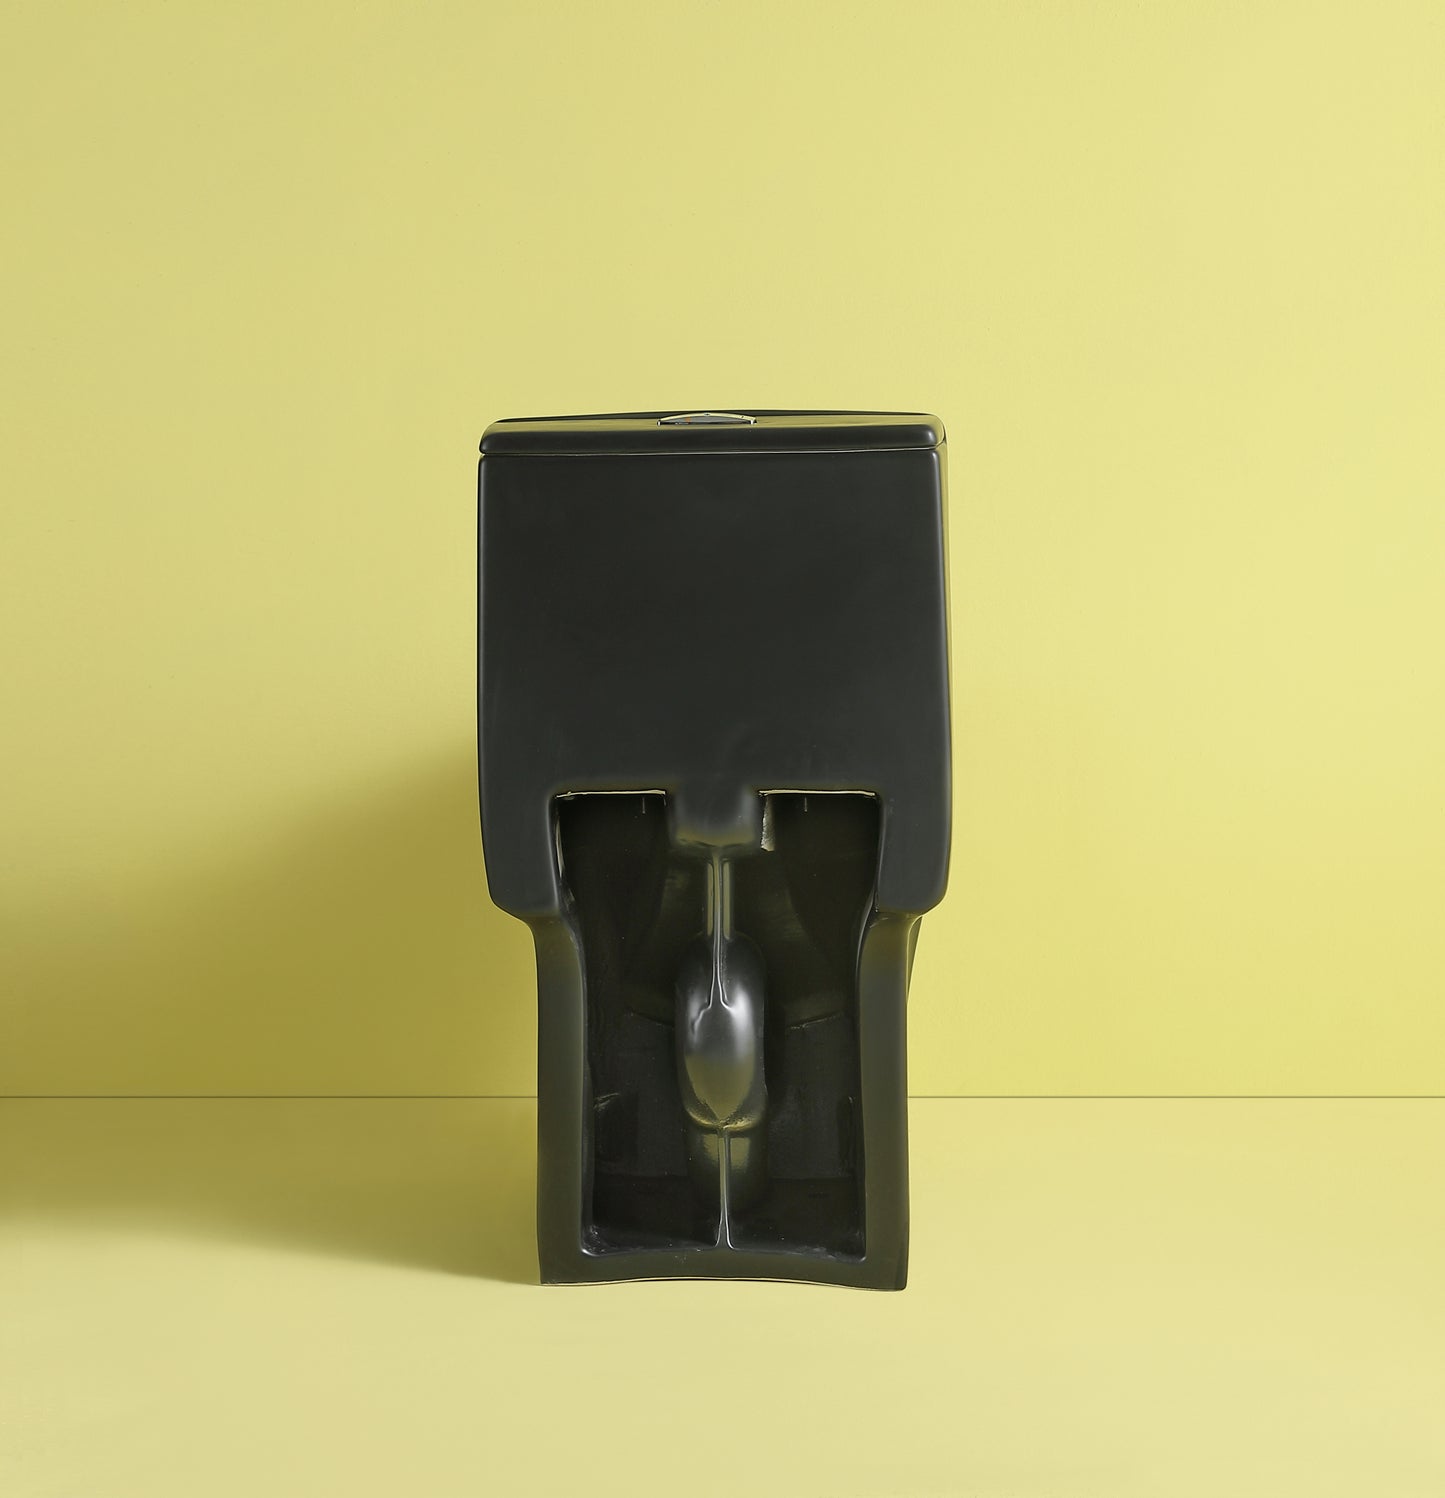 1.1/1.6 GPF Dual Flush 1-Piece Elongated Toilet with Soft-Close Seat - Matt Black 23T02-MB